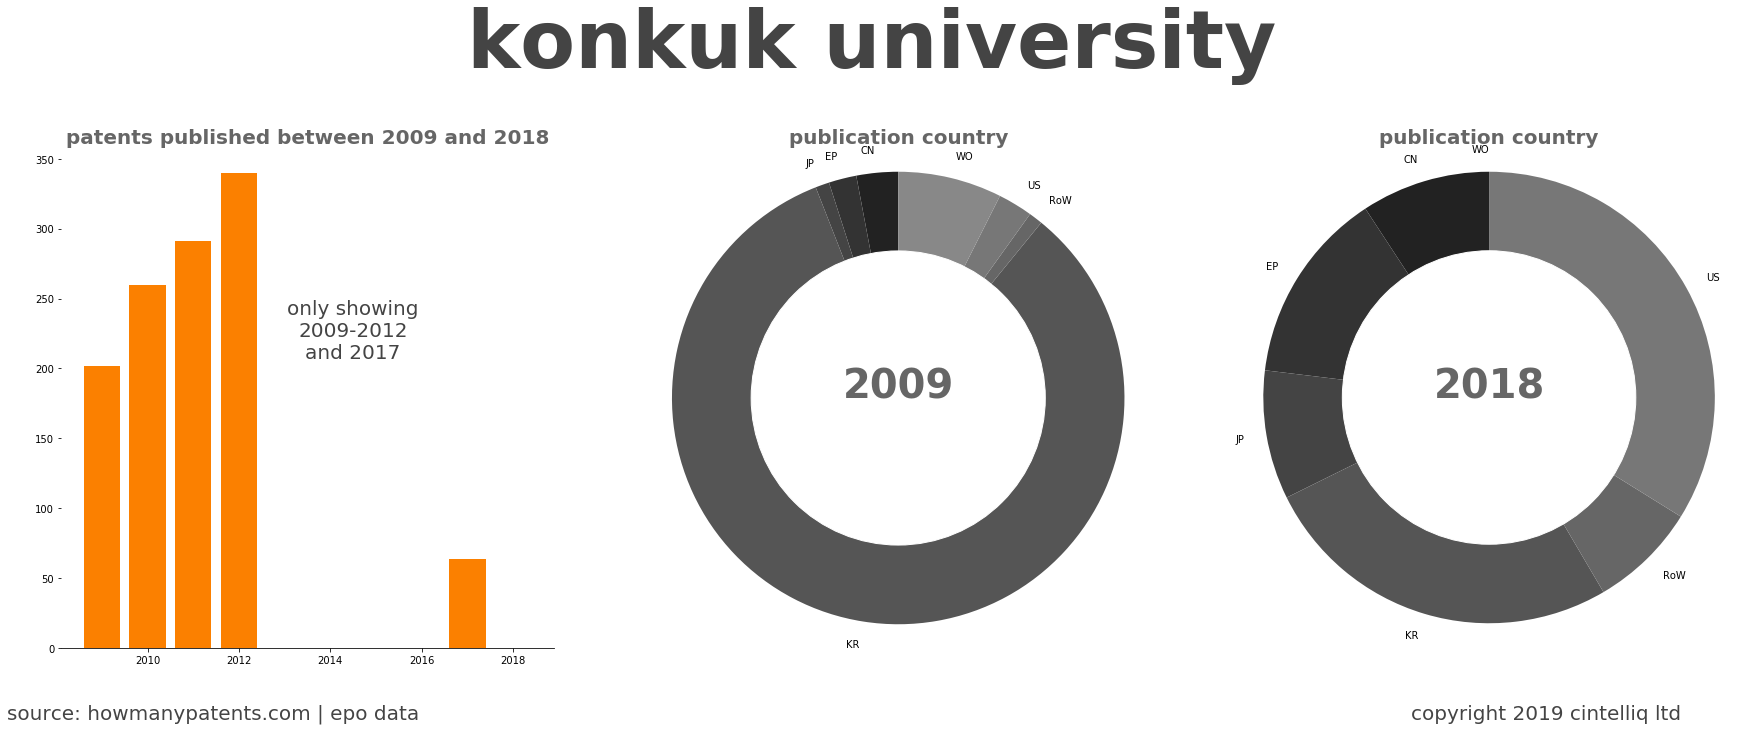 summary of patents for Konkuk University